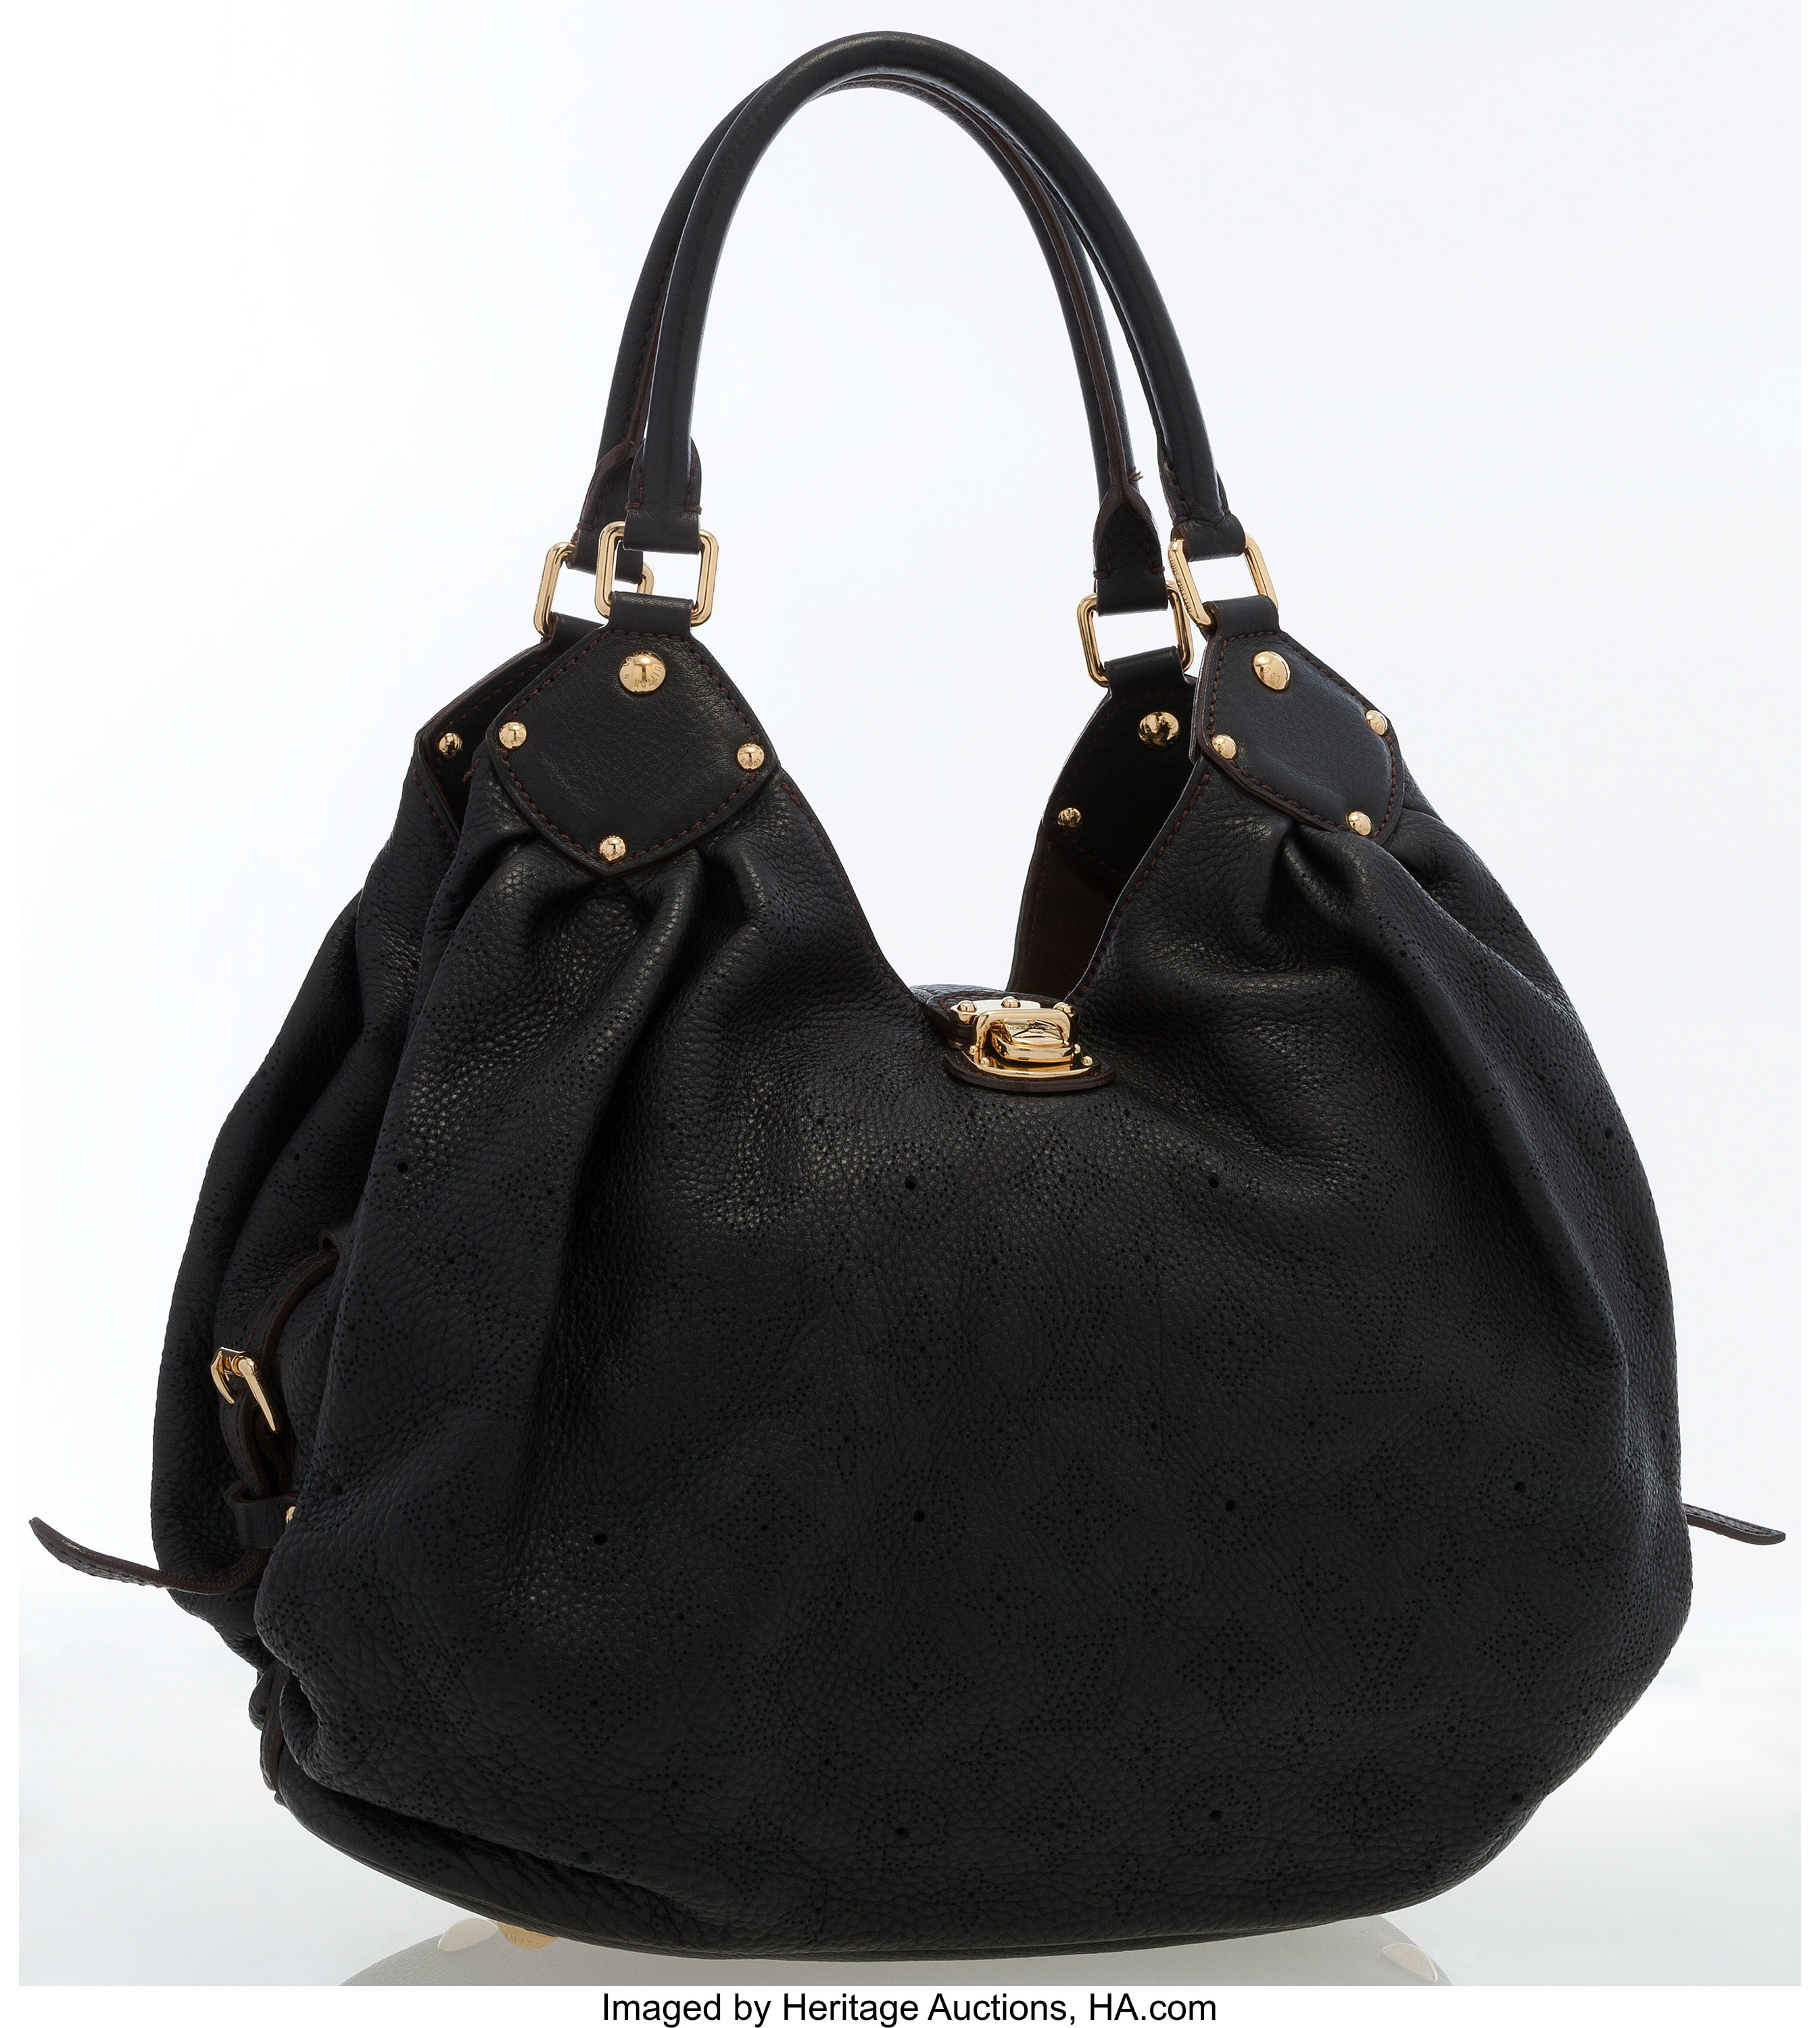 At Auction: A Louis Vuitton Mahina Leather Handbag, Black Leather